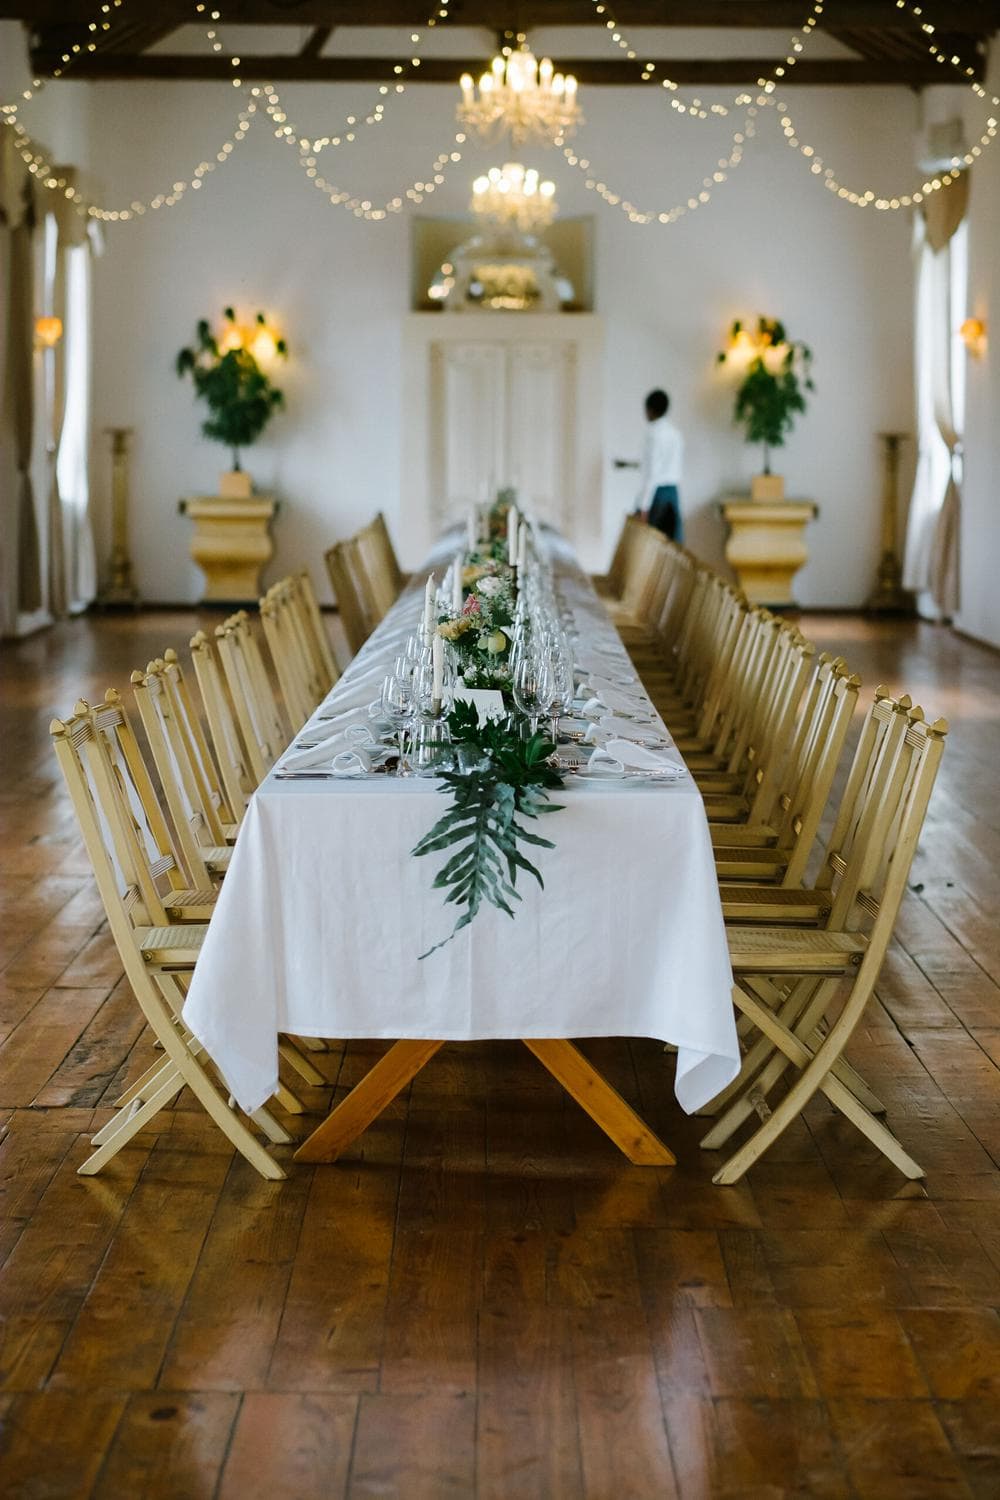 wooden wedding table barn wedding at quinta santa ana #barnwedding #countrysidewedding #portugalweddings #quintadesantanawedding #vineyardwedding #quintadesantanadogradil